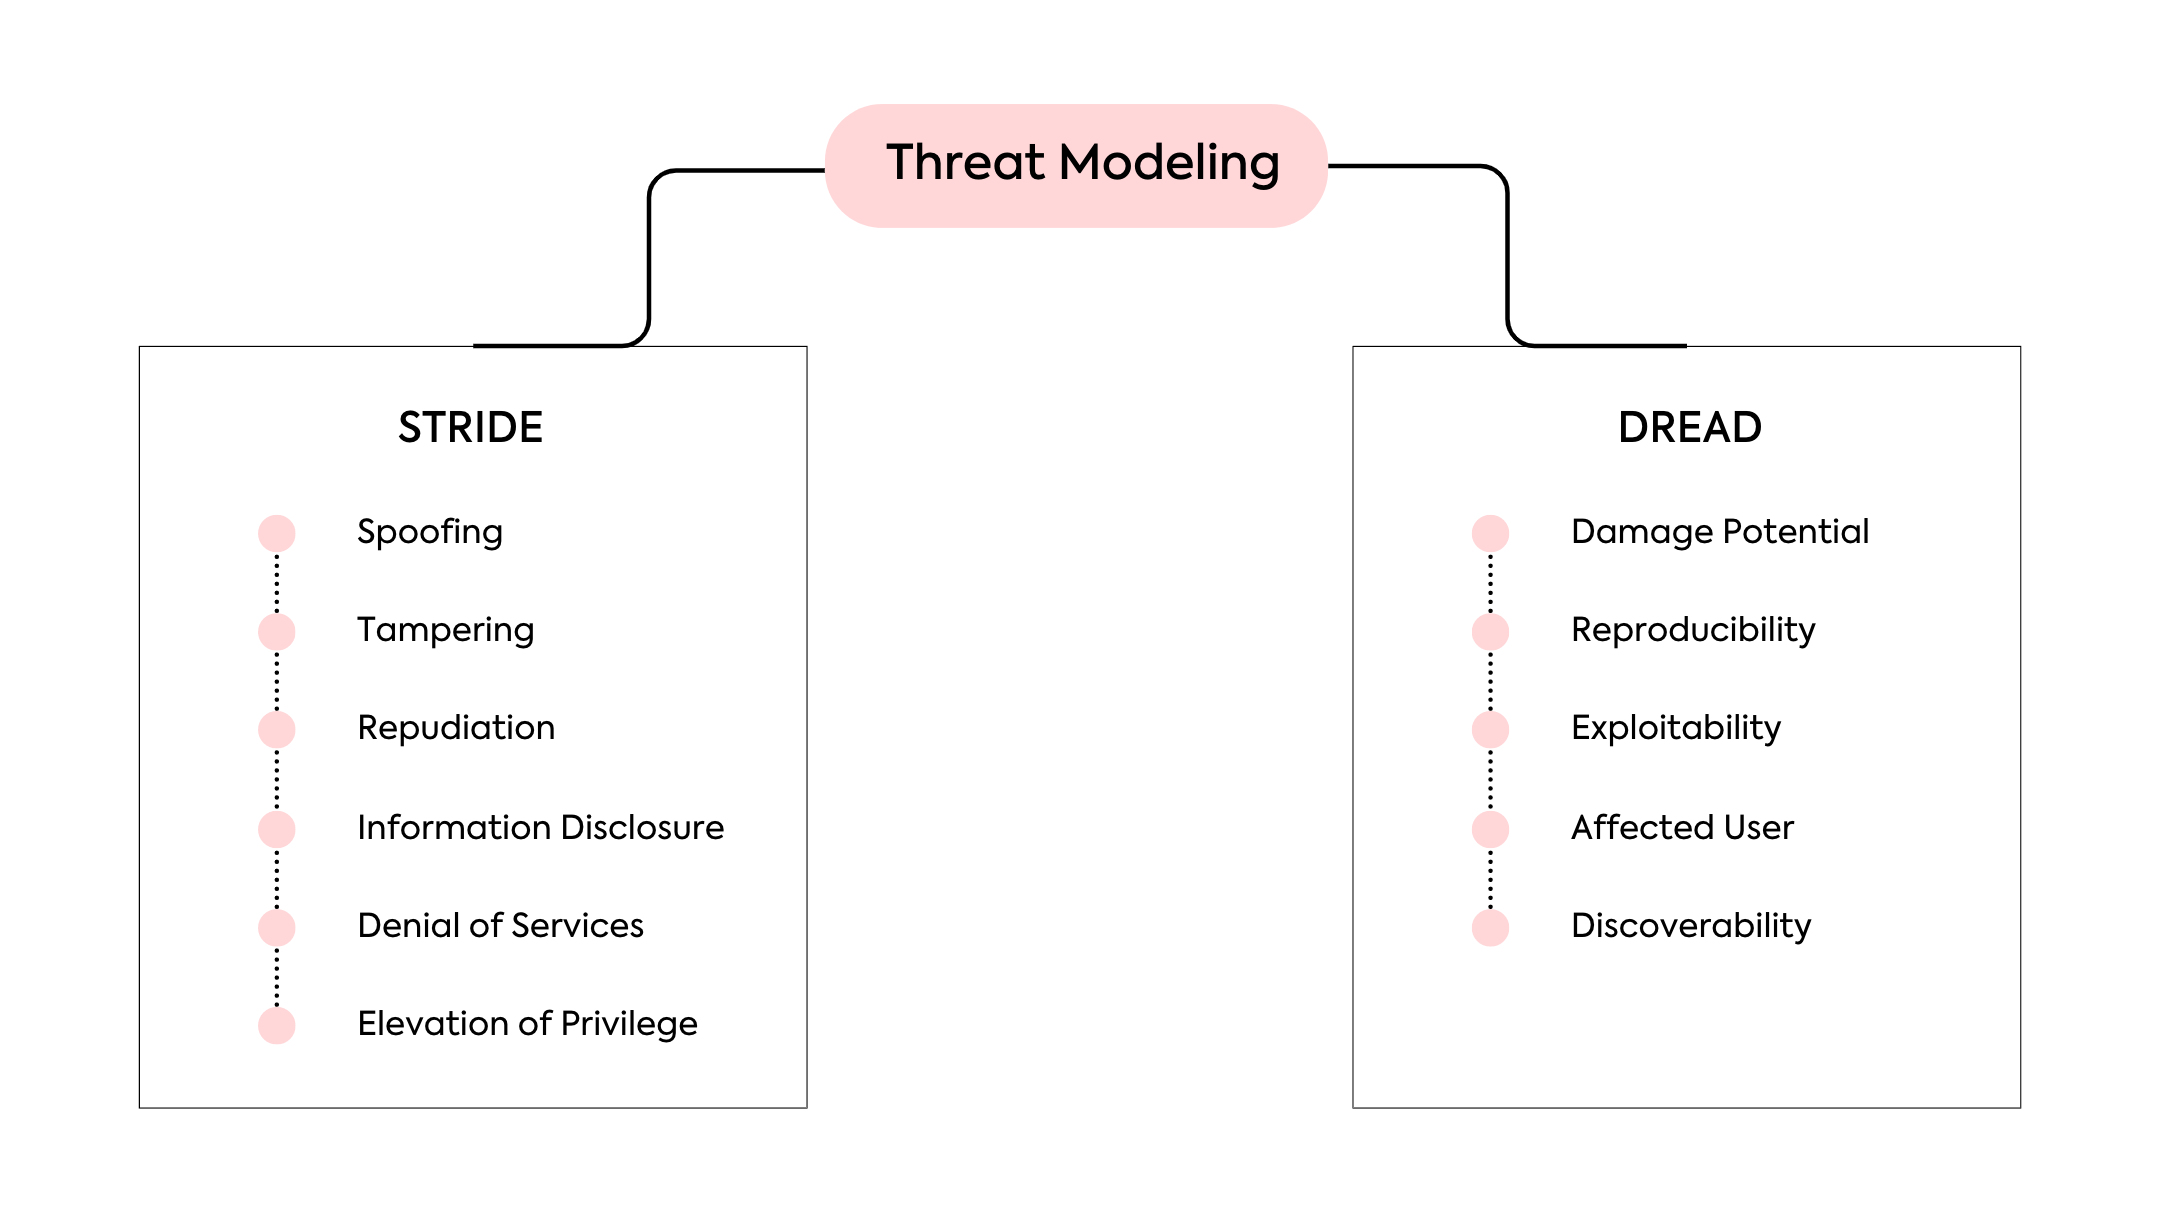 DREAD Threat Modeling 